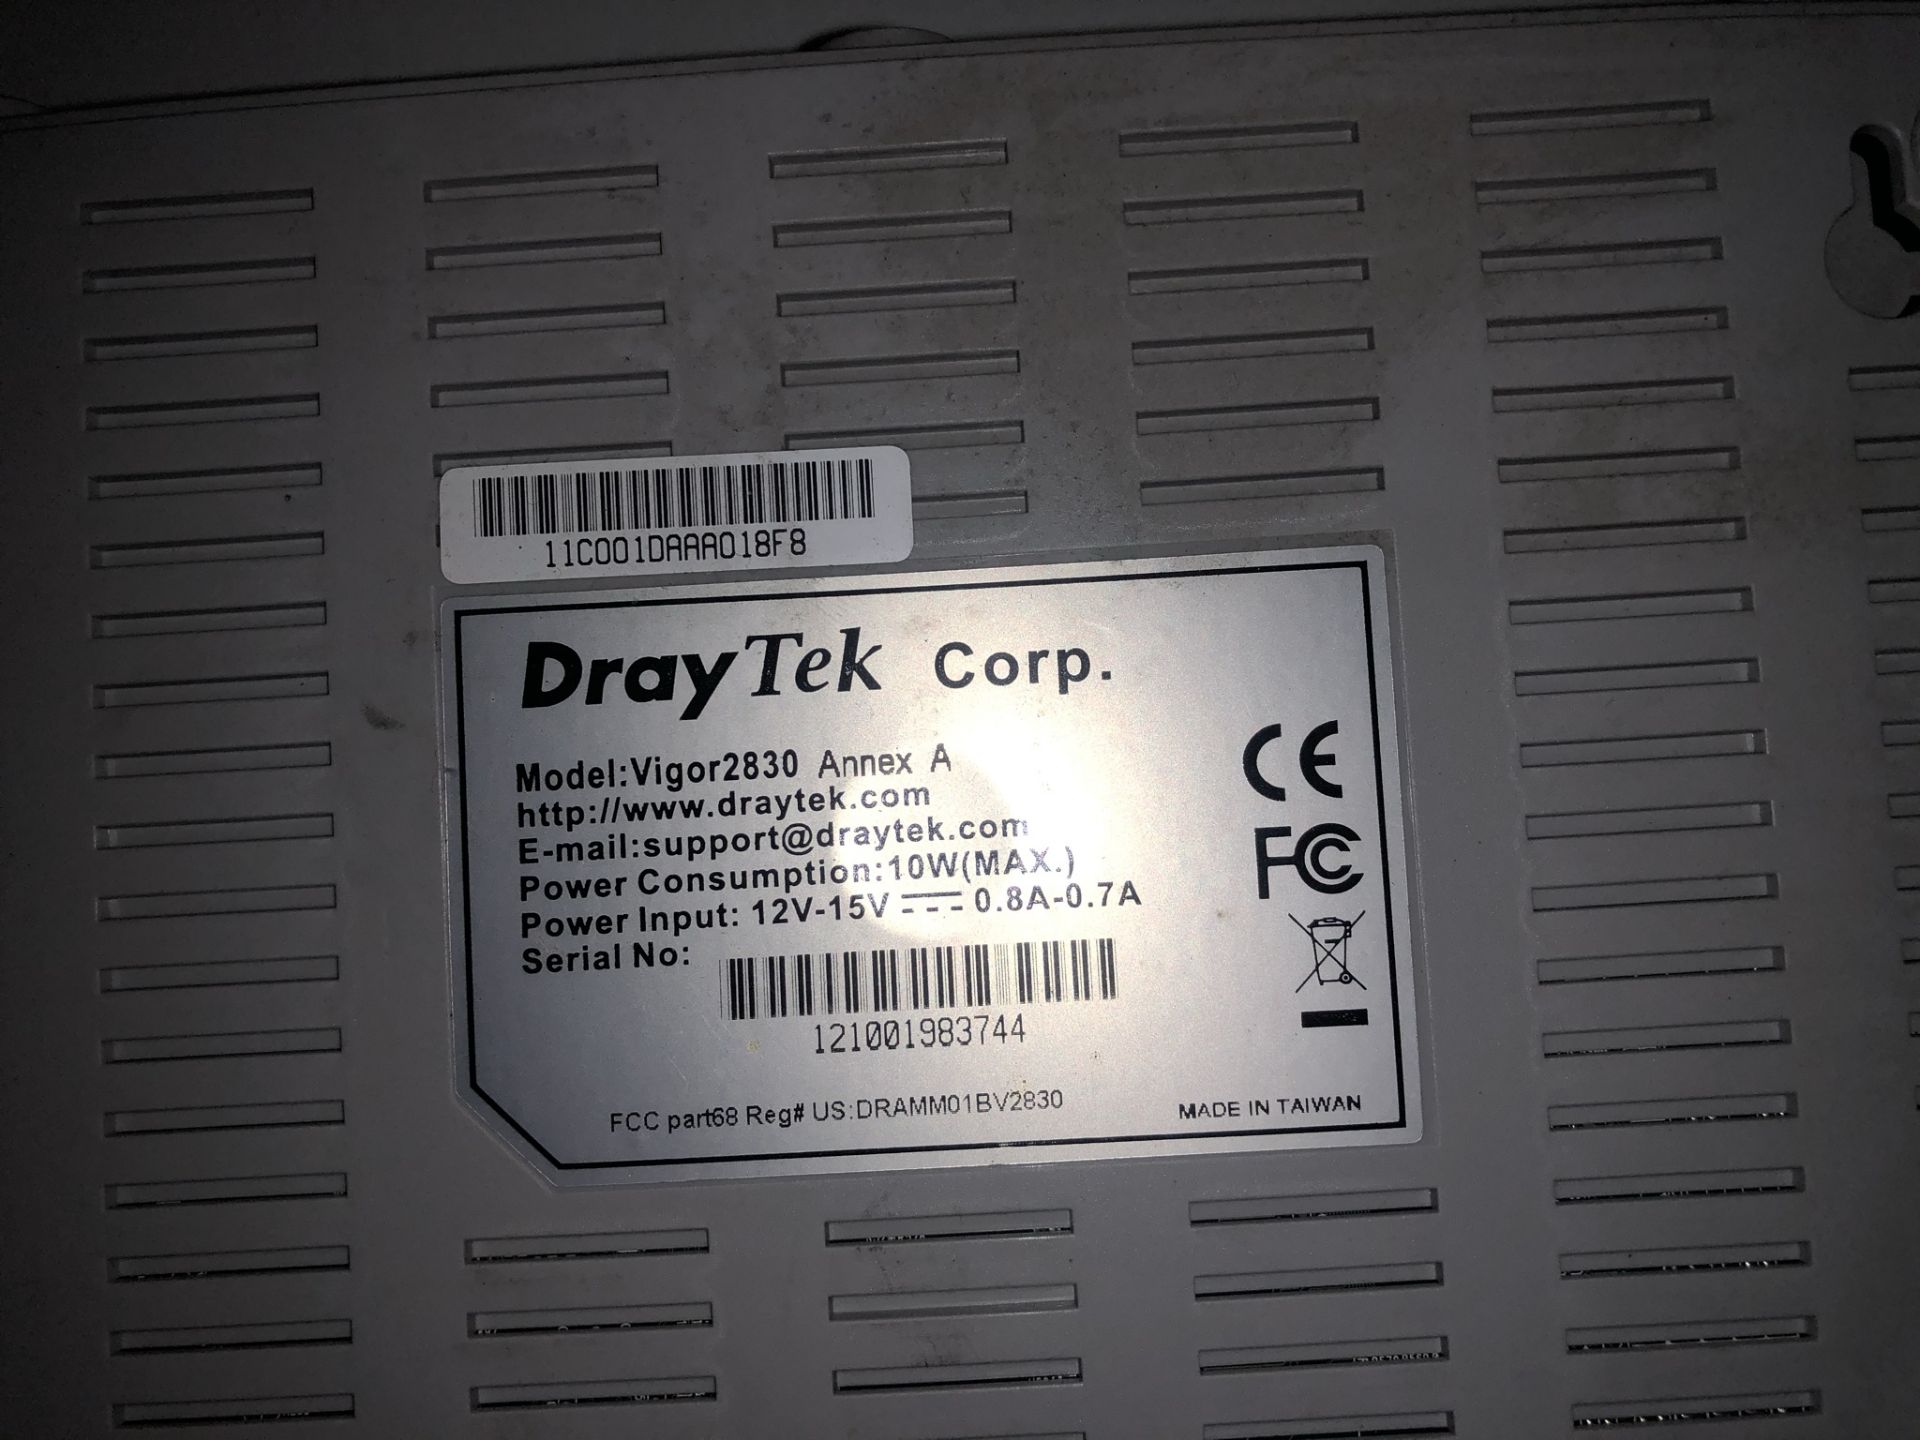 2 x Draytek Vigor2830 Wireless Firewall Routers - Image 3 of 4